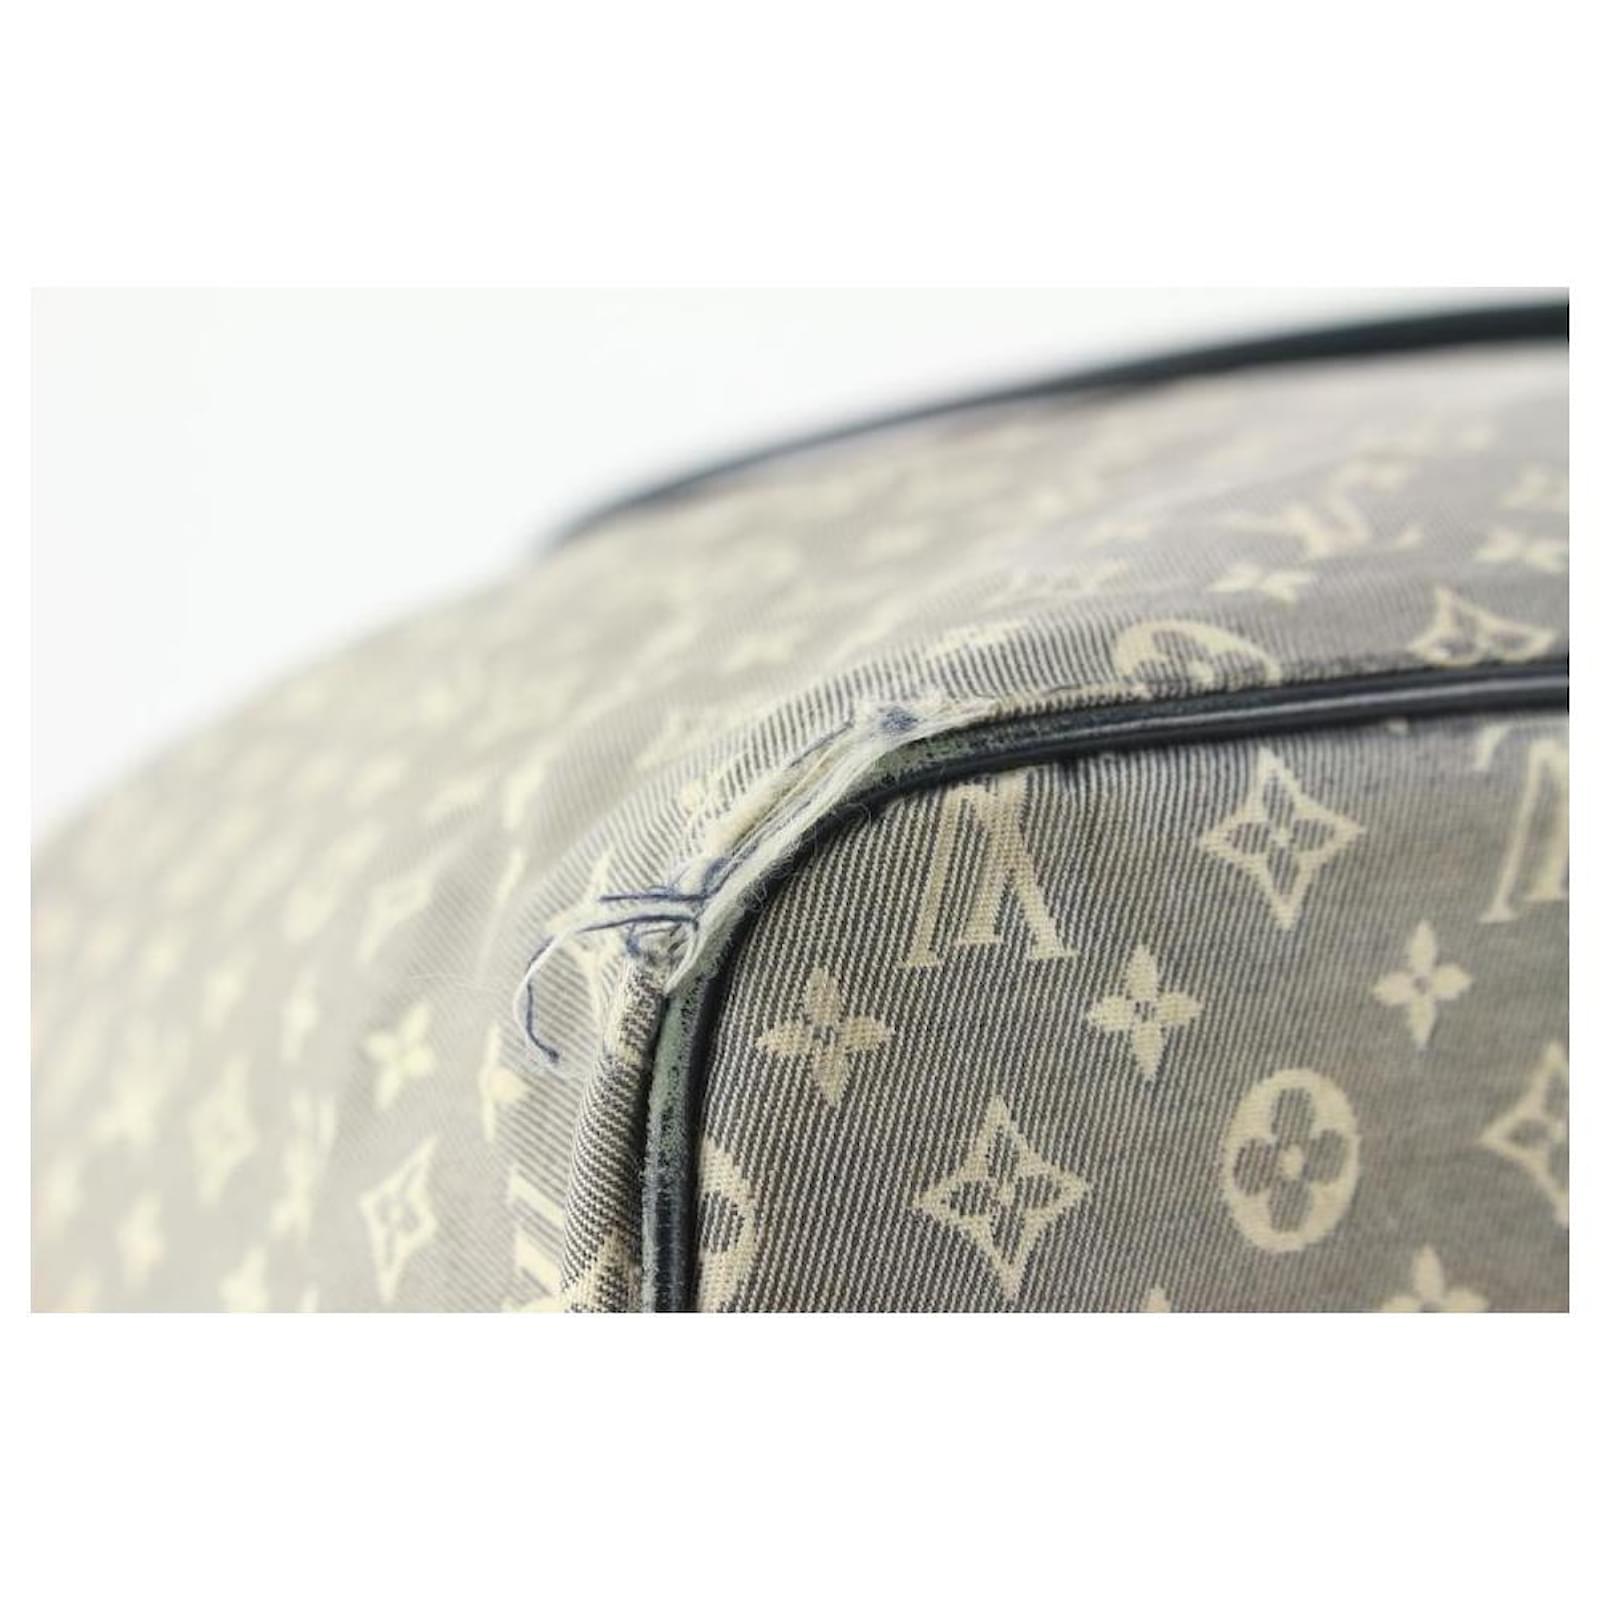 Louis Vuitton Monogram Idylle Mini Lin Neverfull MM Tote